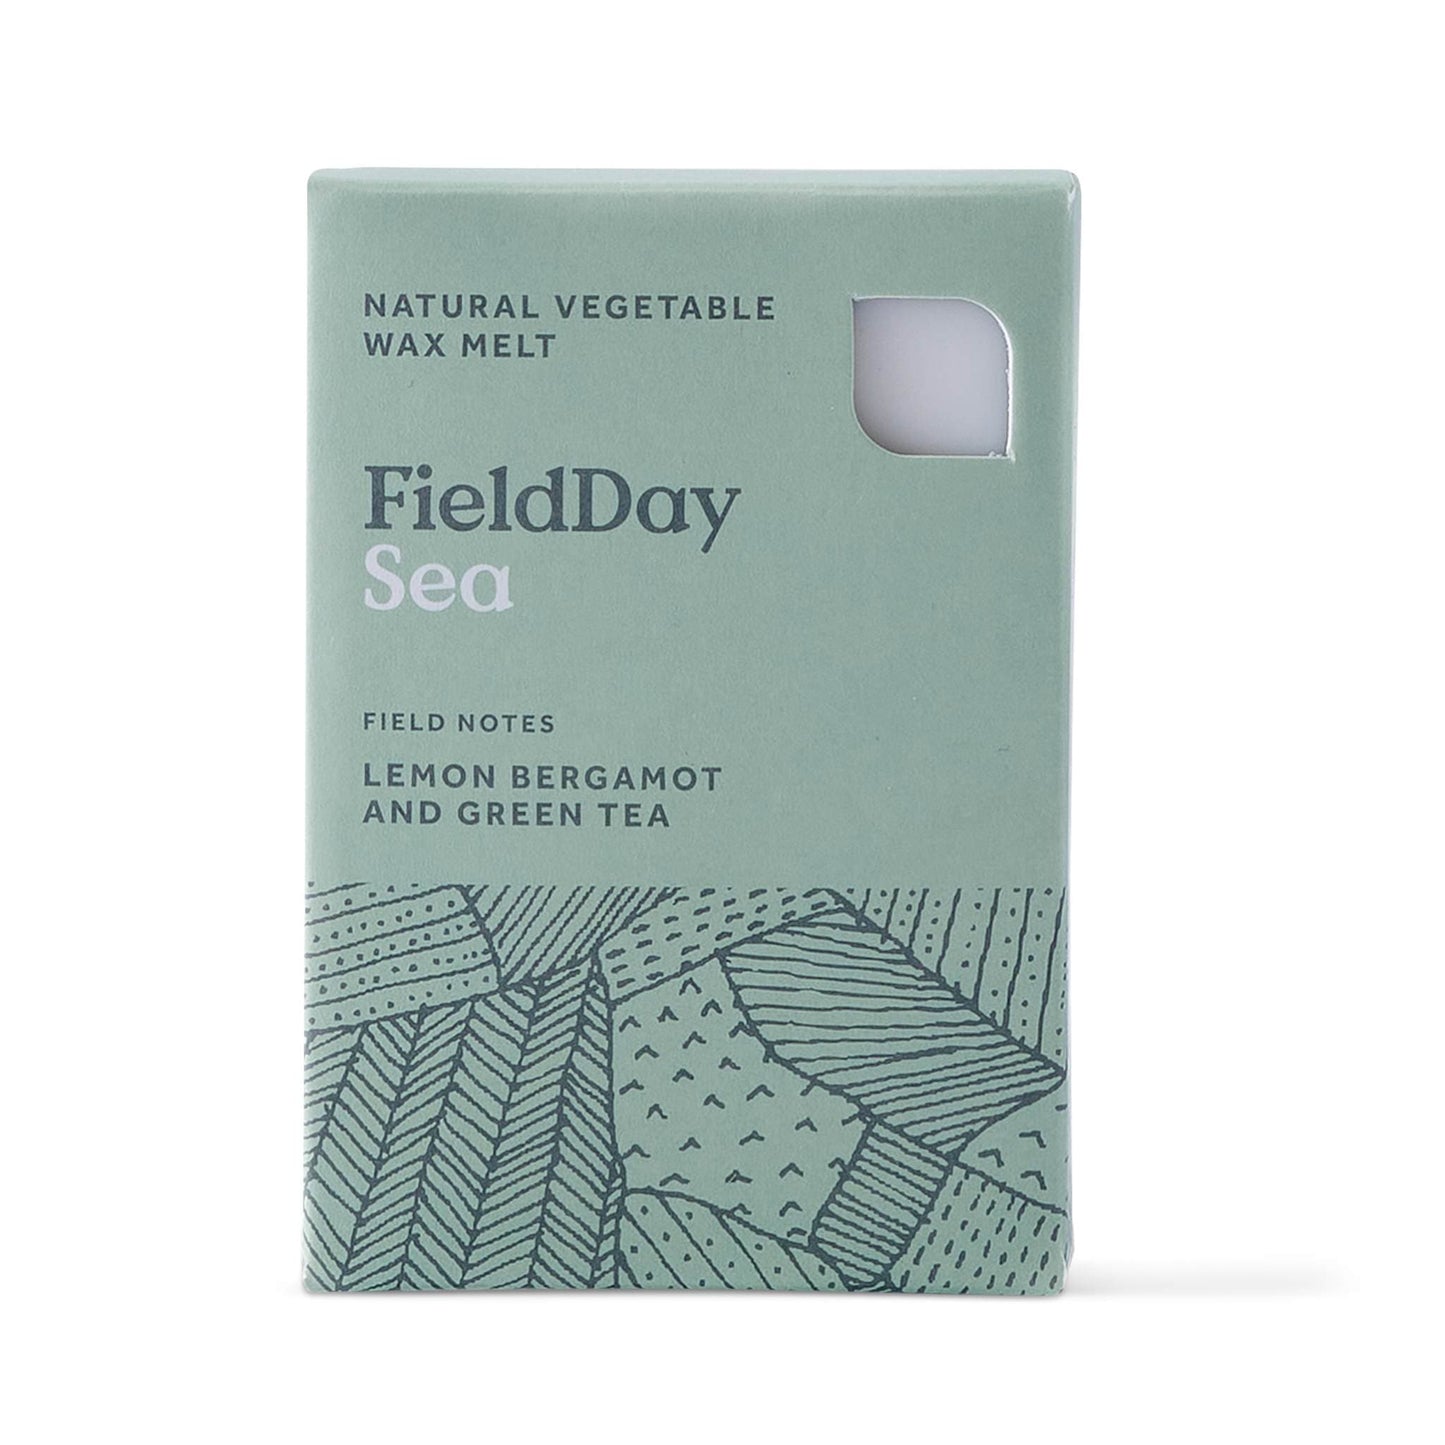 FieldDay Wax Tarts Sea Wax Melts - Natural Vegetable Wax Melts - FieldDay